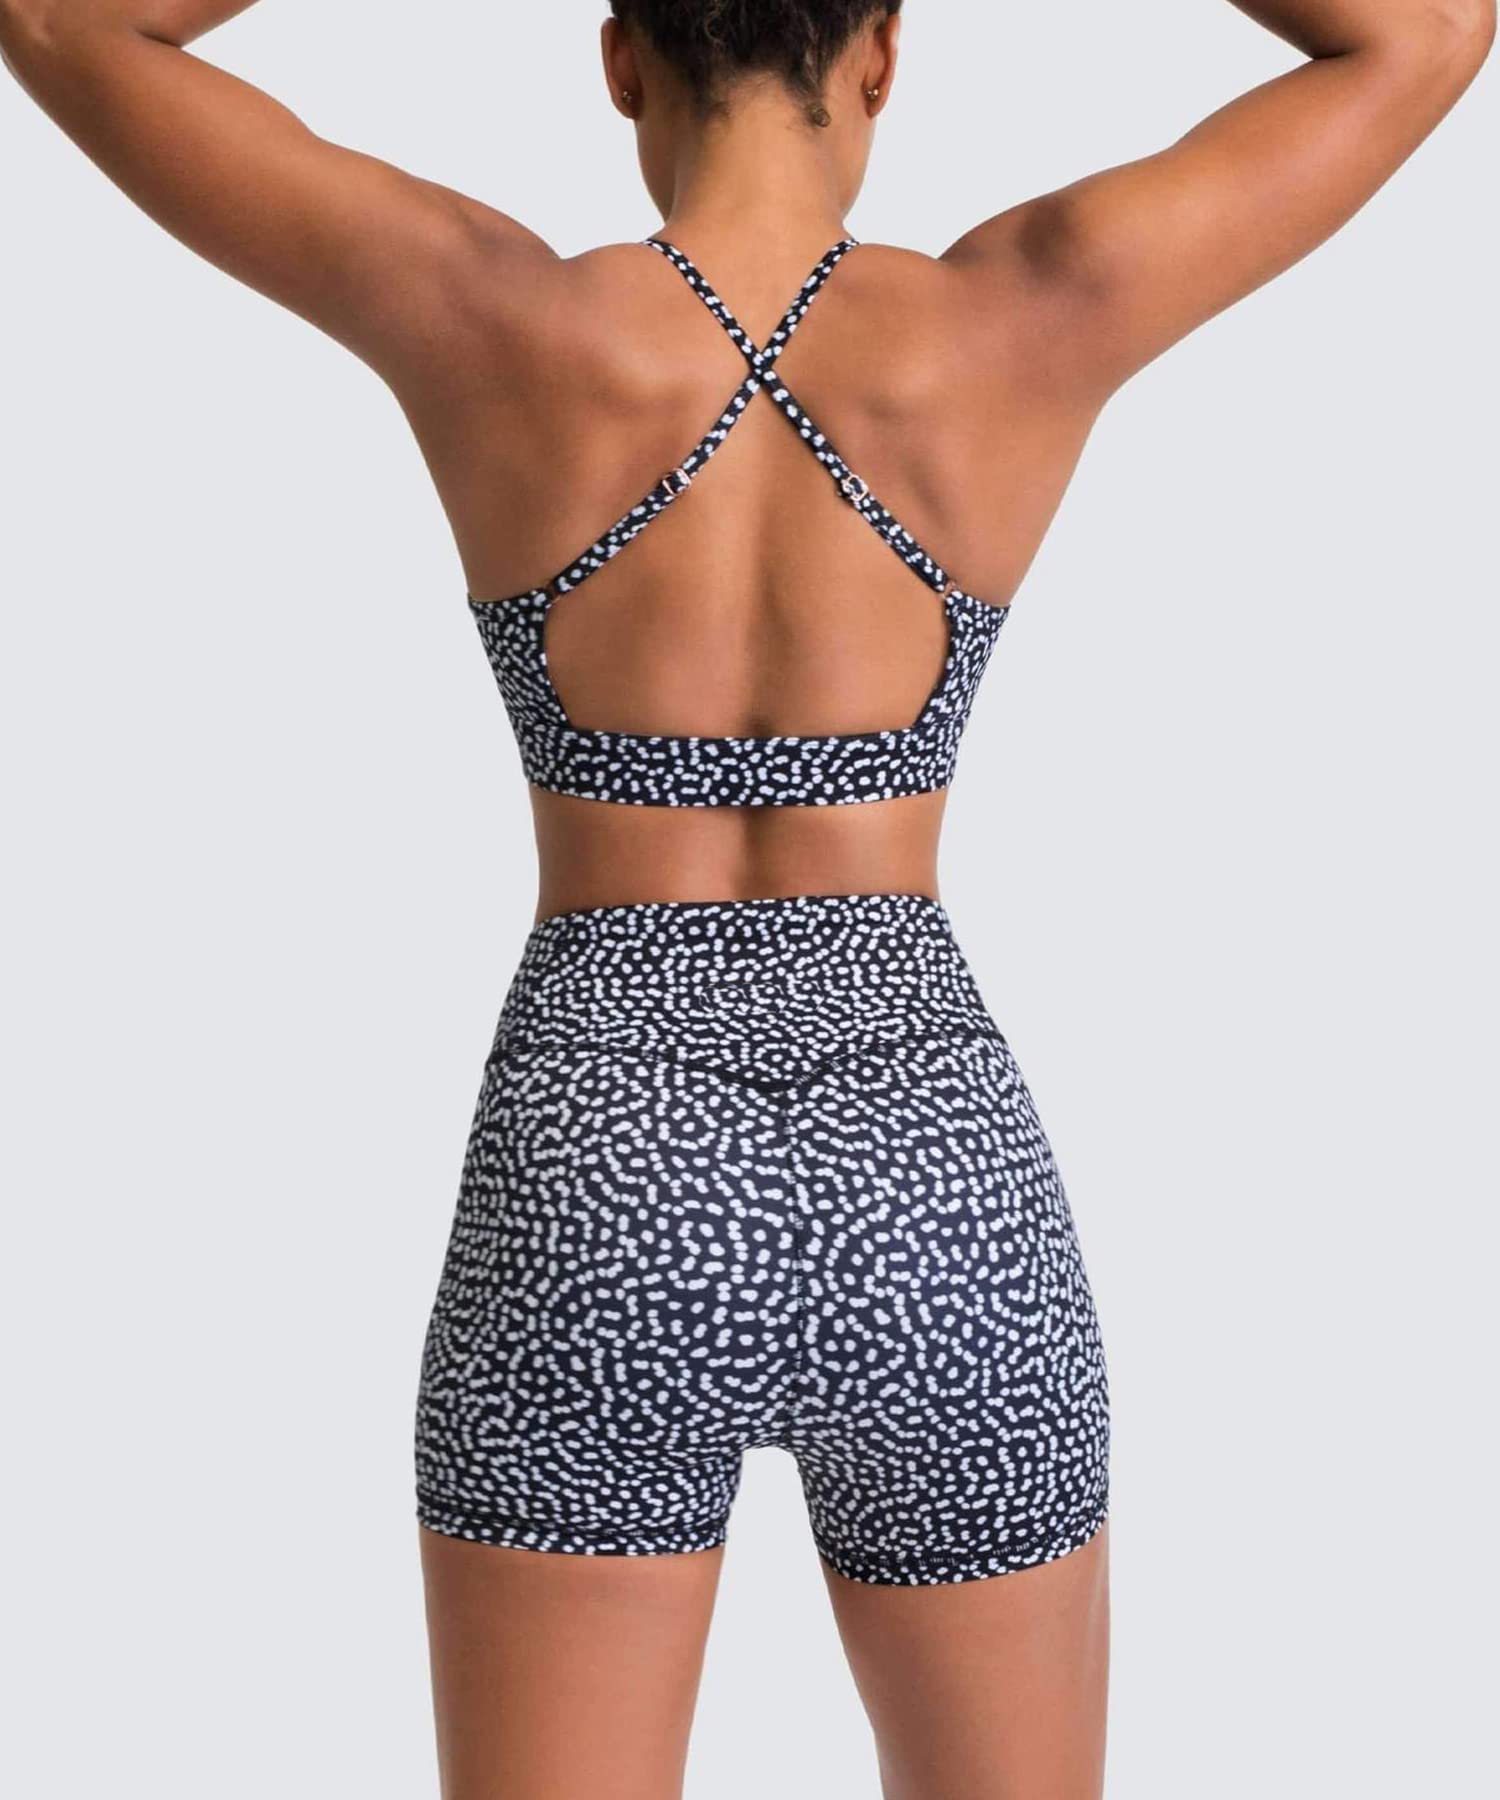 IWEMEK Women 2 Piece Workout Outfits Polka Dot Print High Wasit Biker Shorts + Backless Adjustable Sport Bra Sets Exercise Running Gym Clothes Black Polka Dots Small